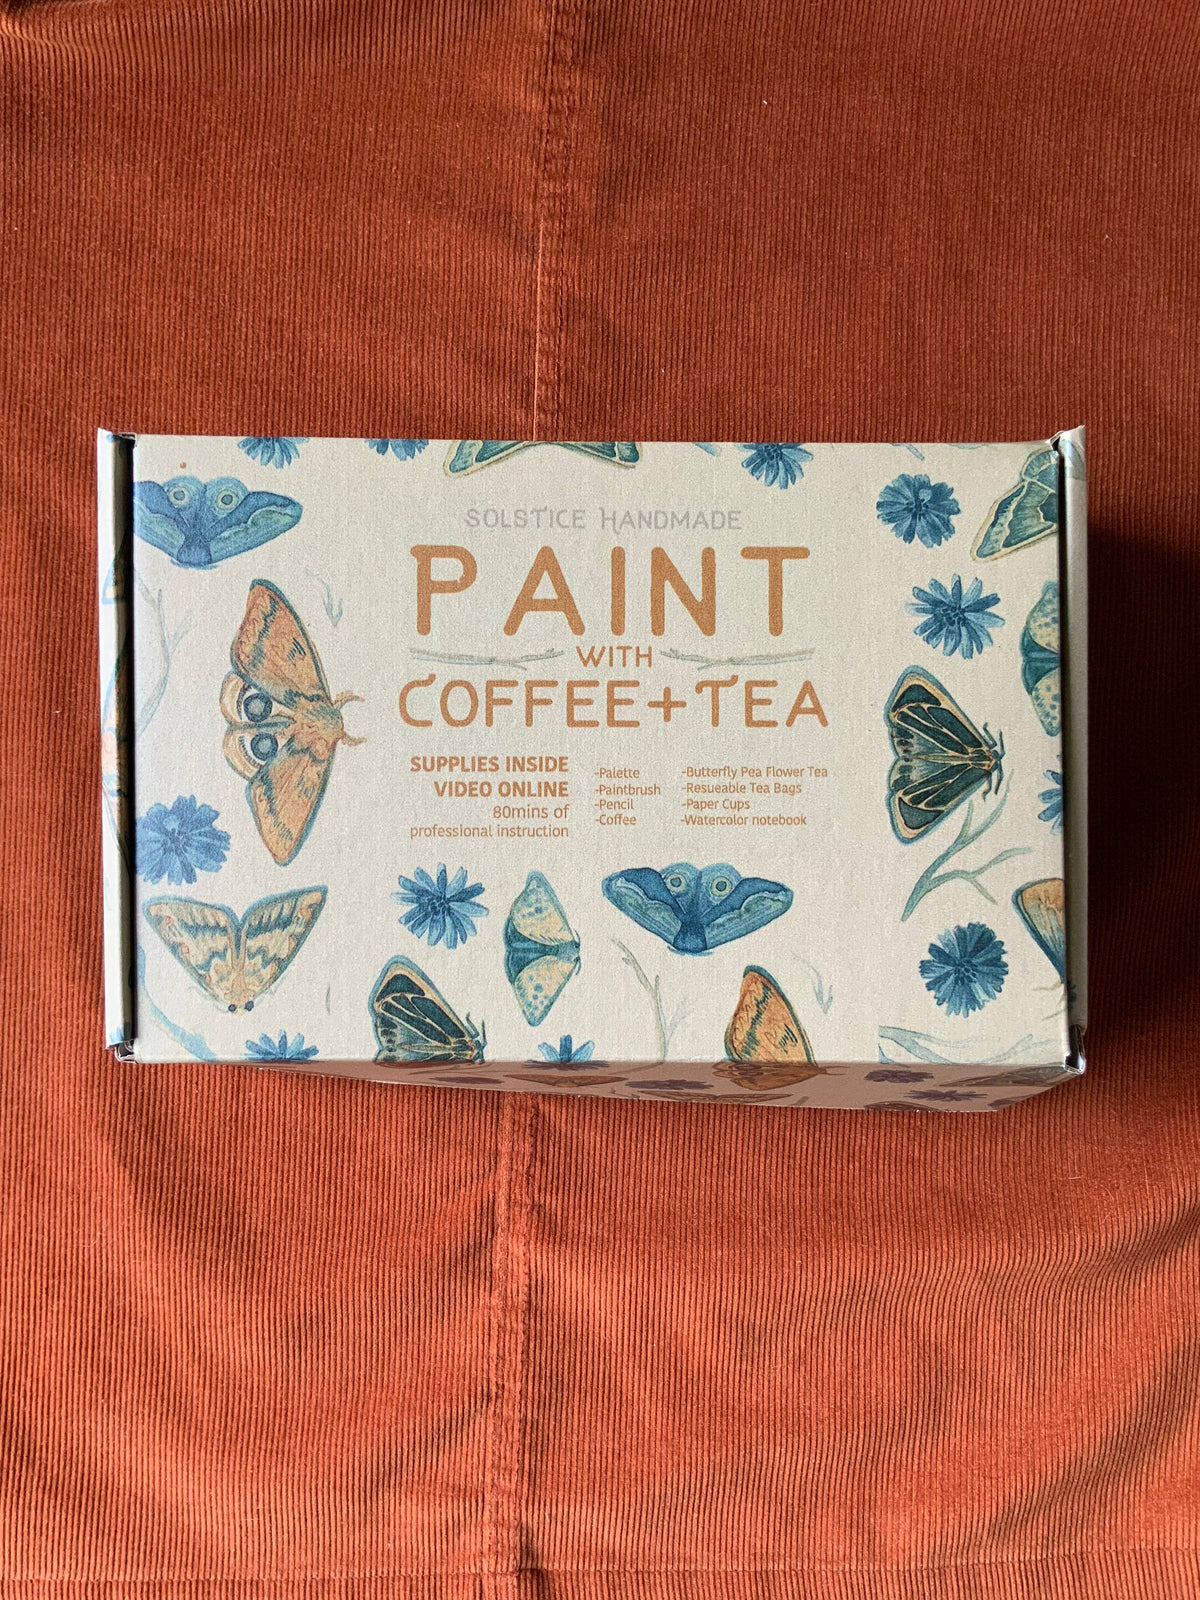 Paint with Coffee + Tea kit plus virtual class